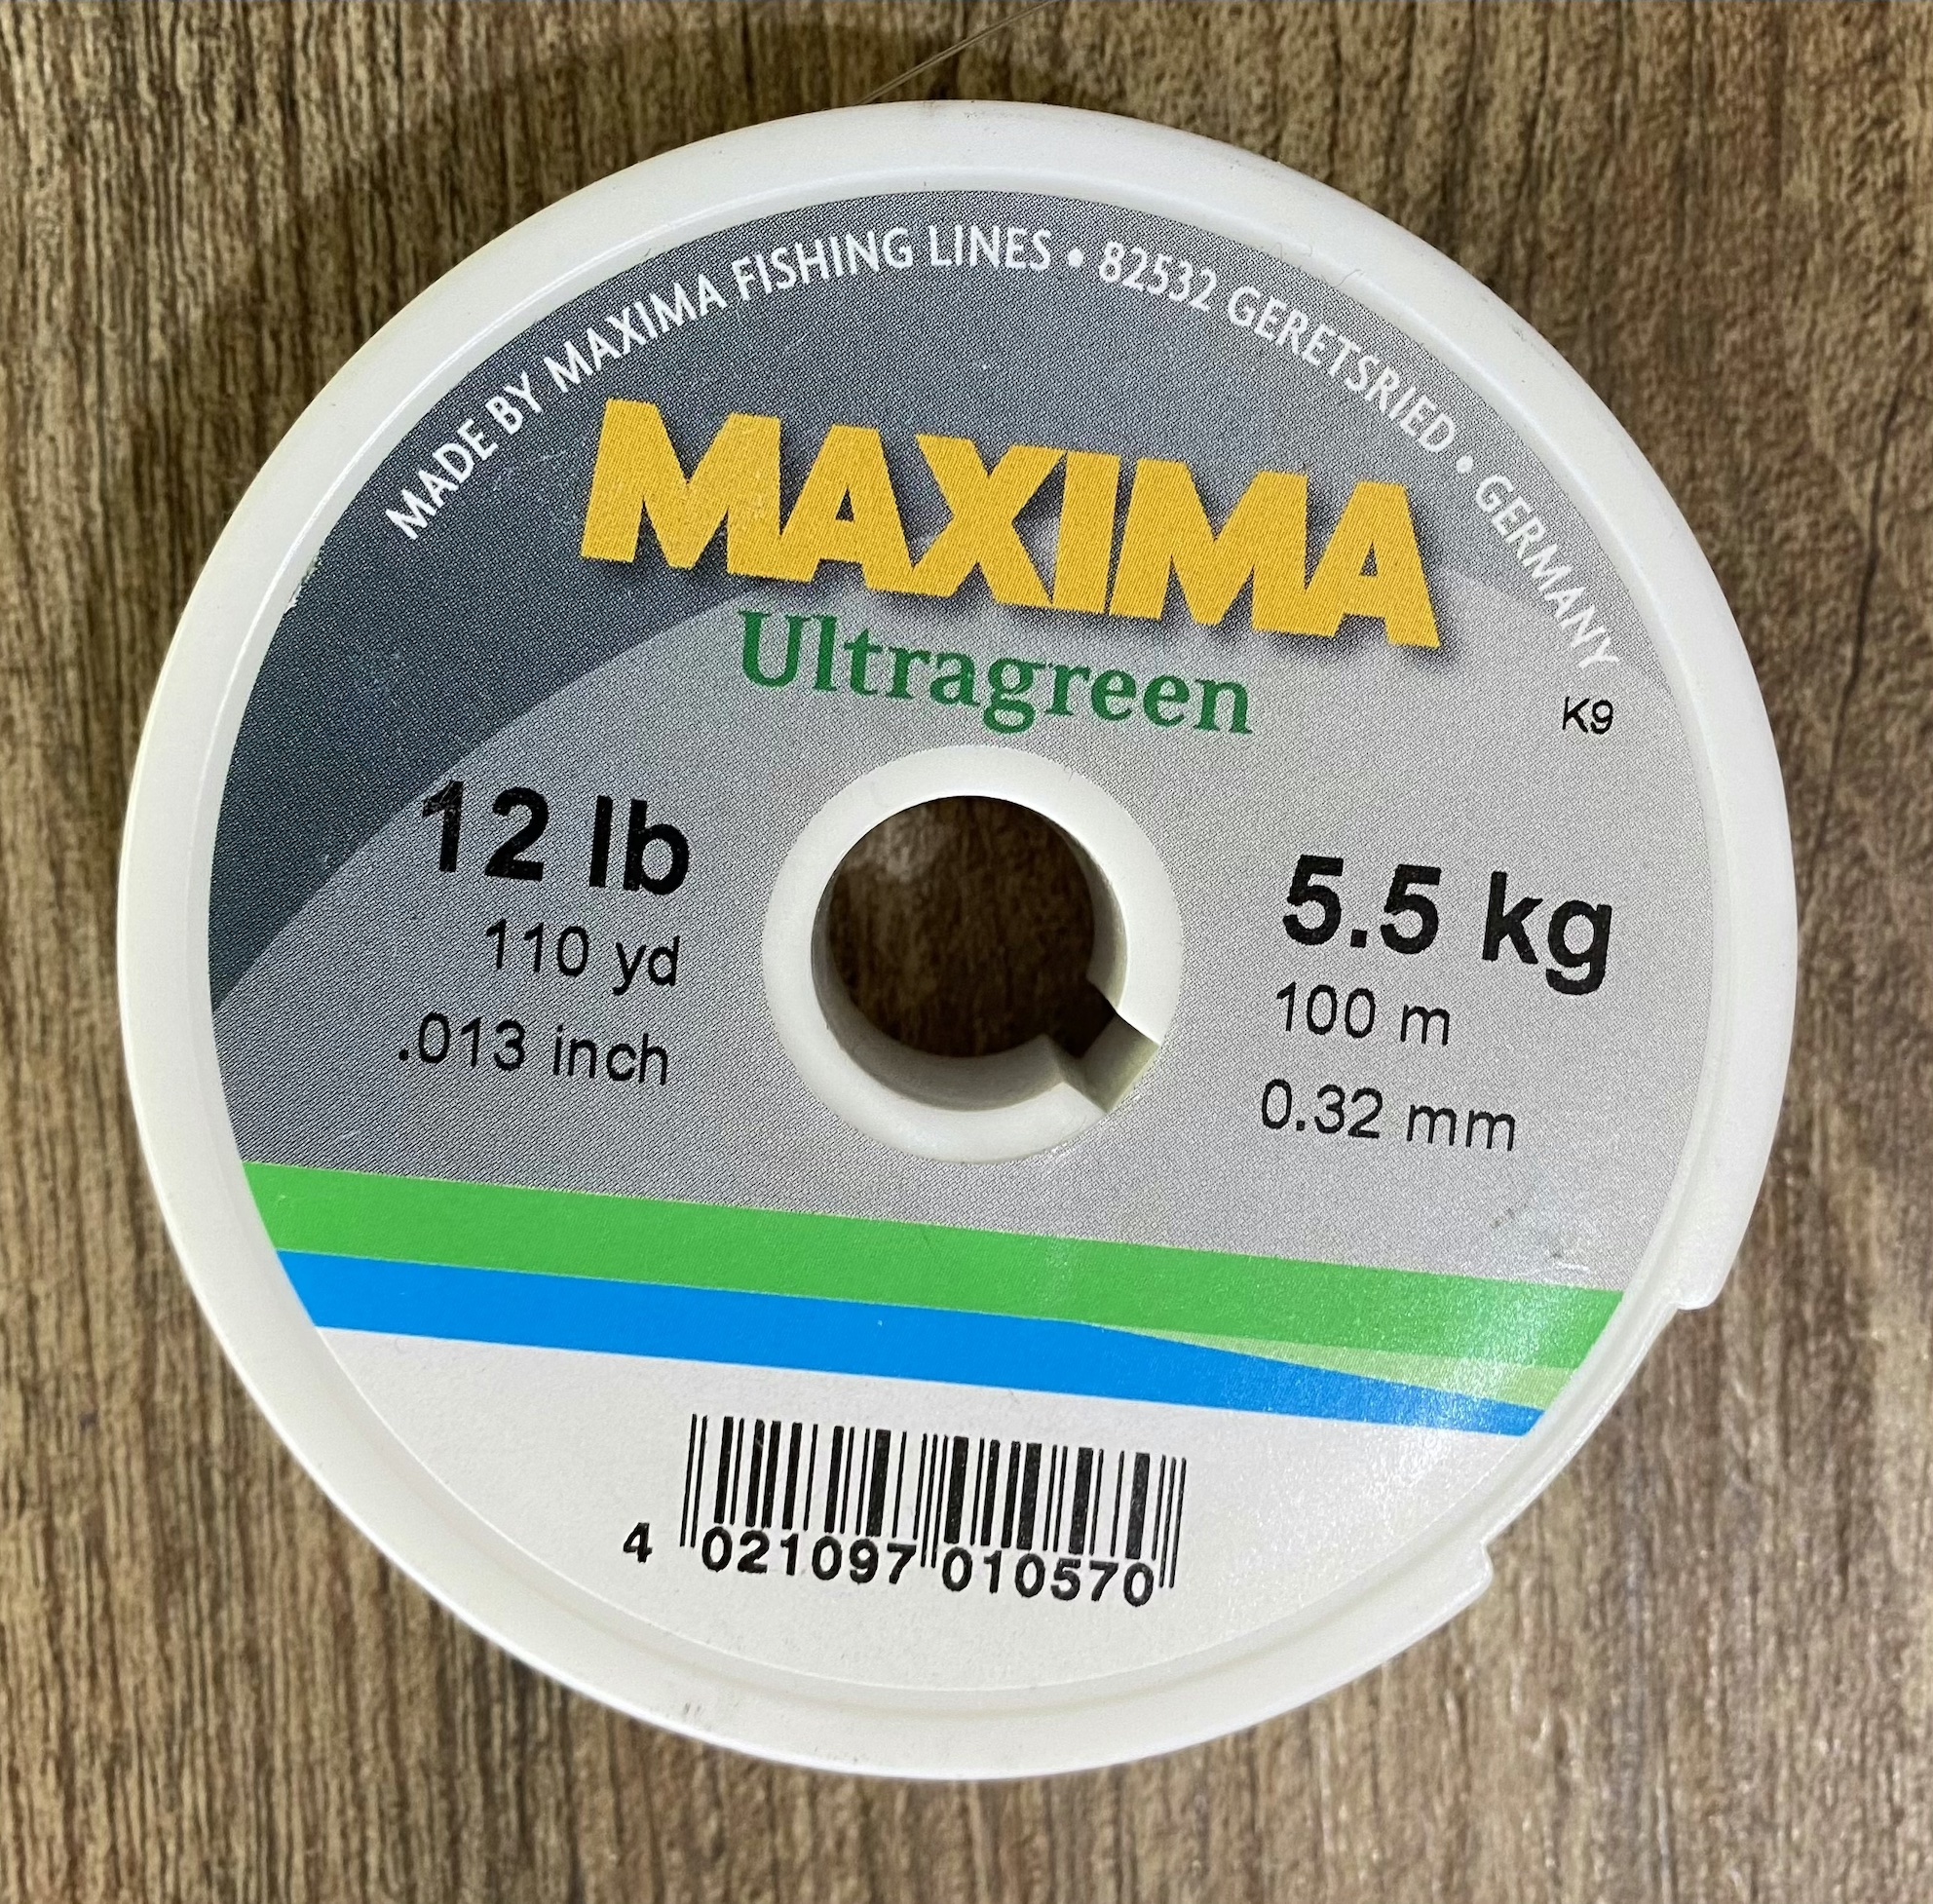 Maxima Ultragreen Leader Material - Tie N Fly